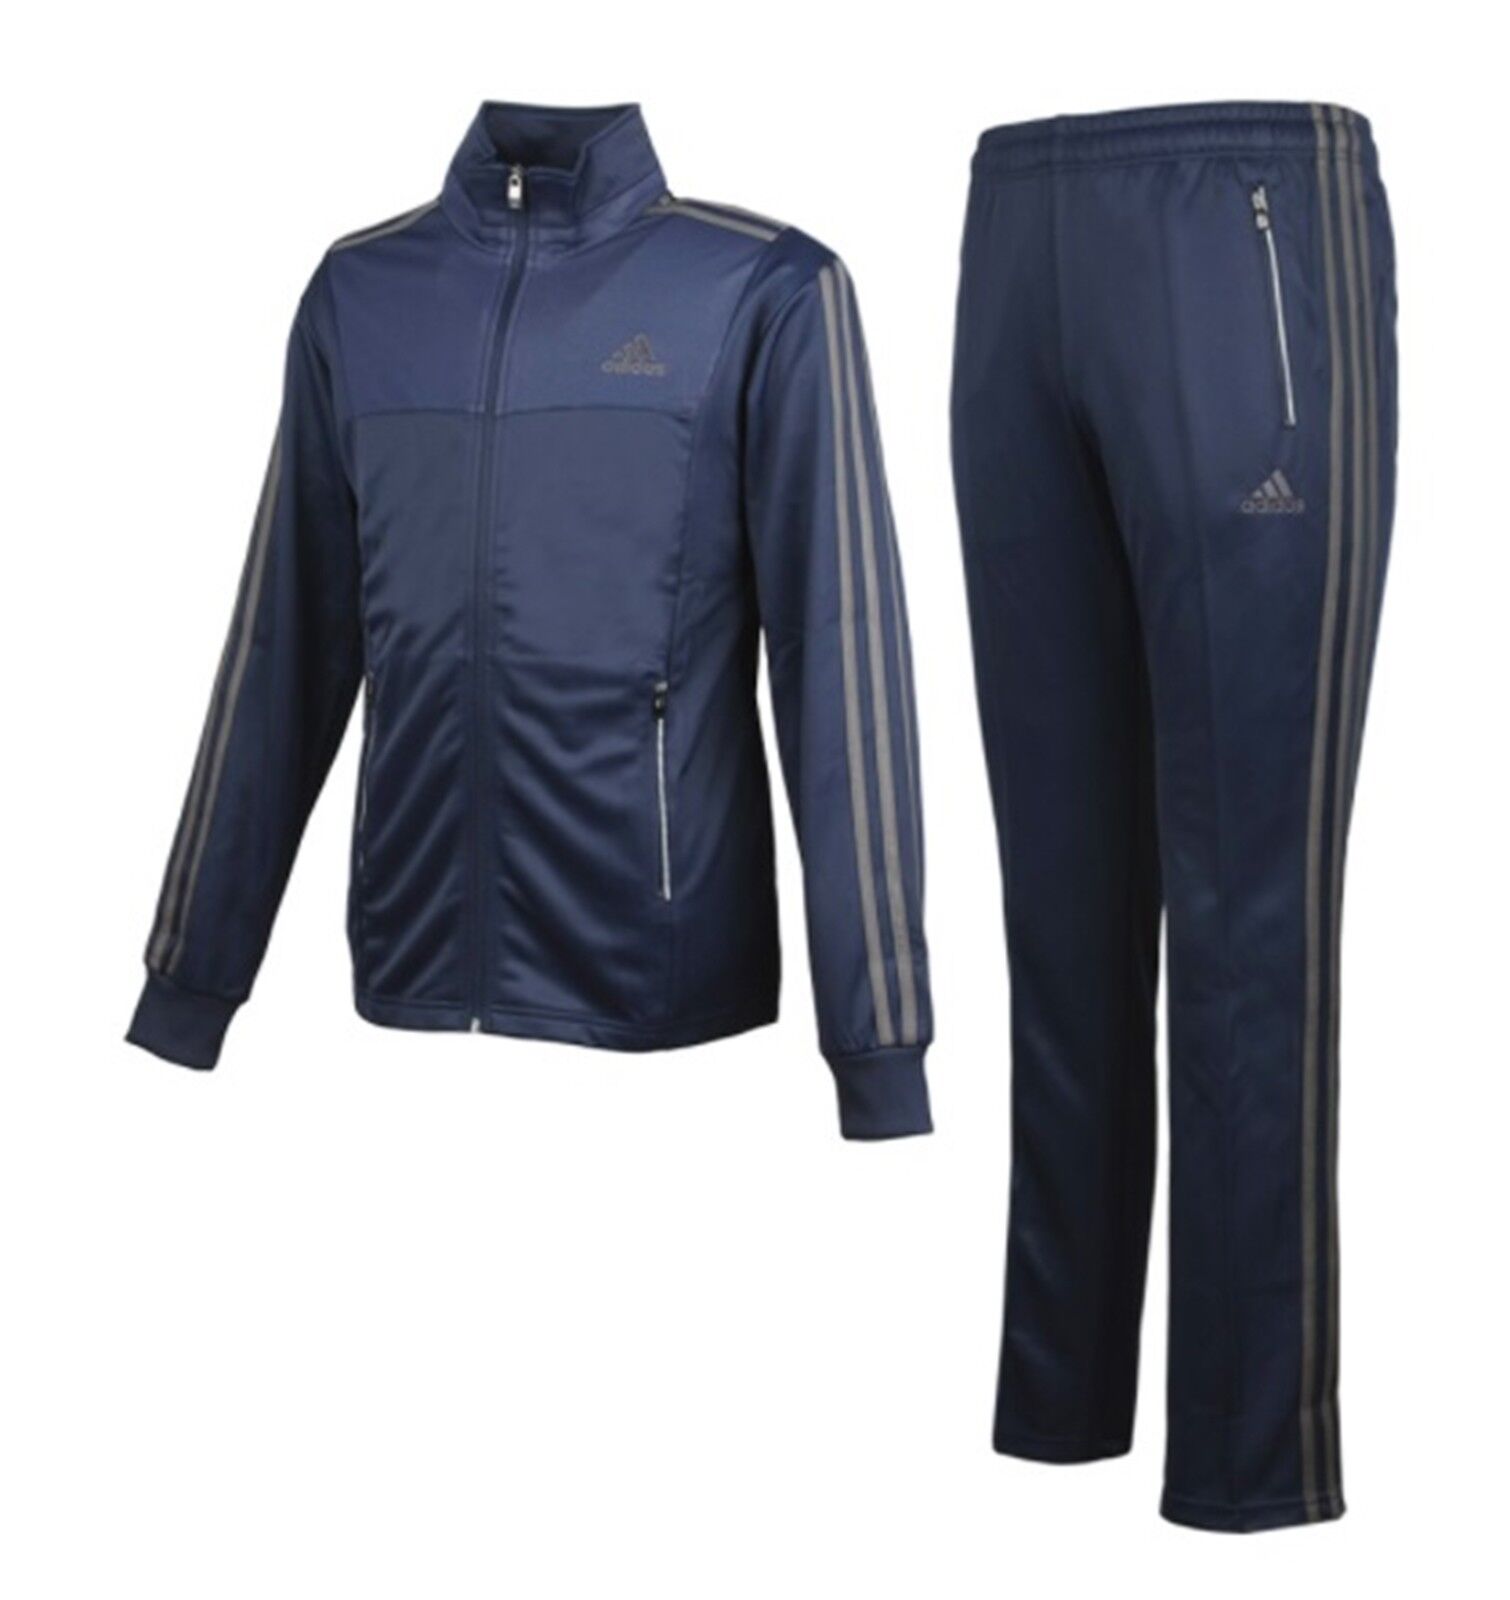 Mondstuk vergeten actie Adidas Men Knit Track Training Suit Set Winter Soccer Jacket Pant  AN7708-AN7709 | eBay